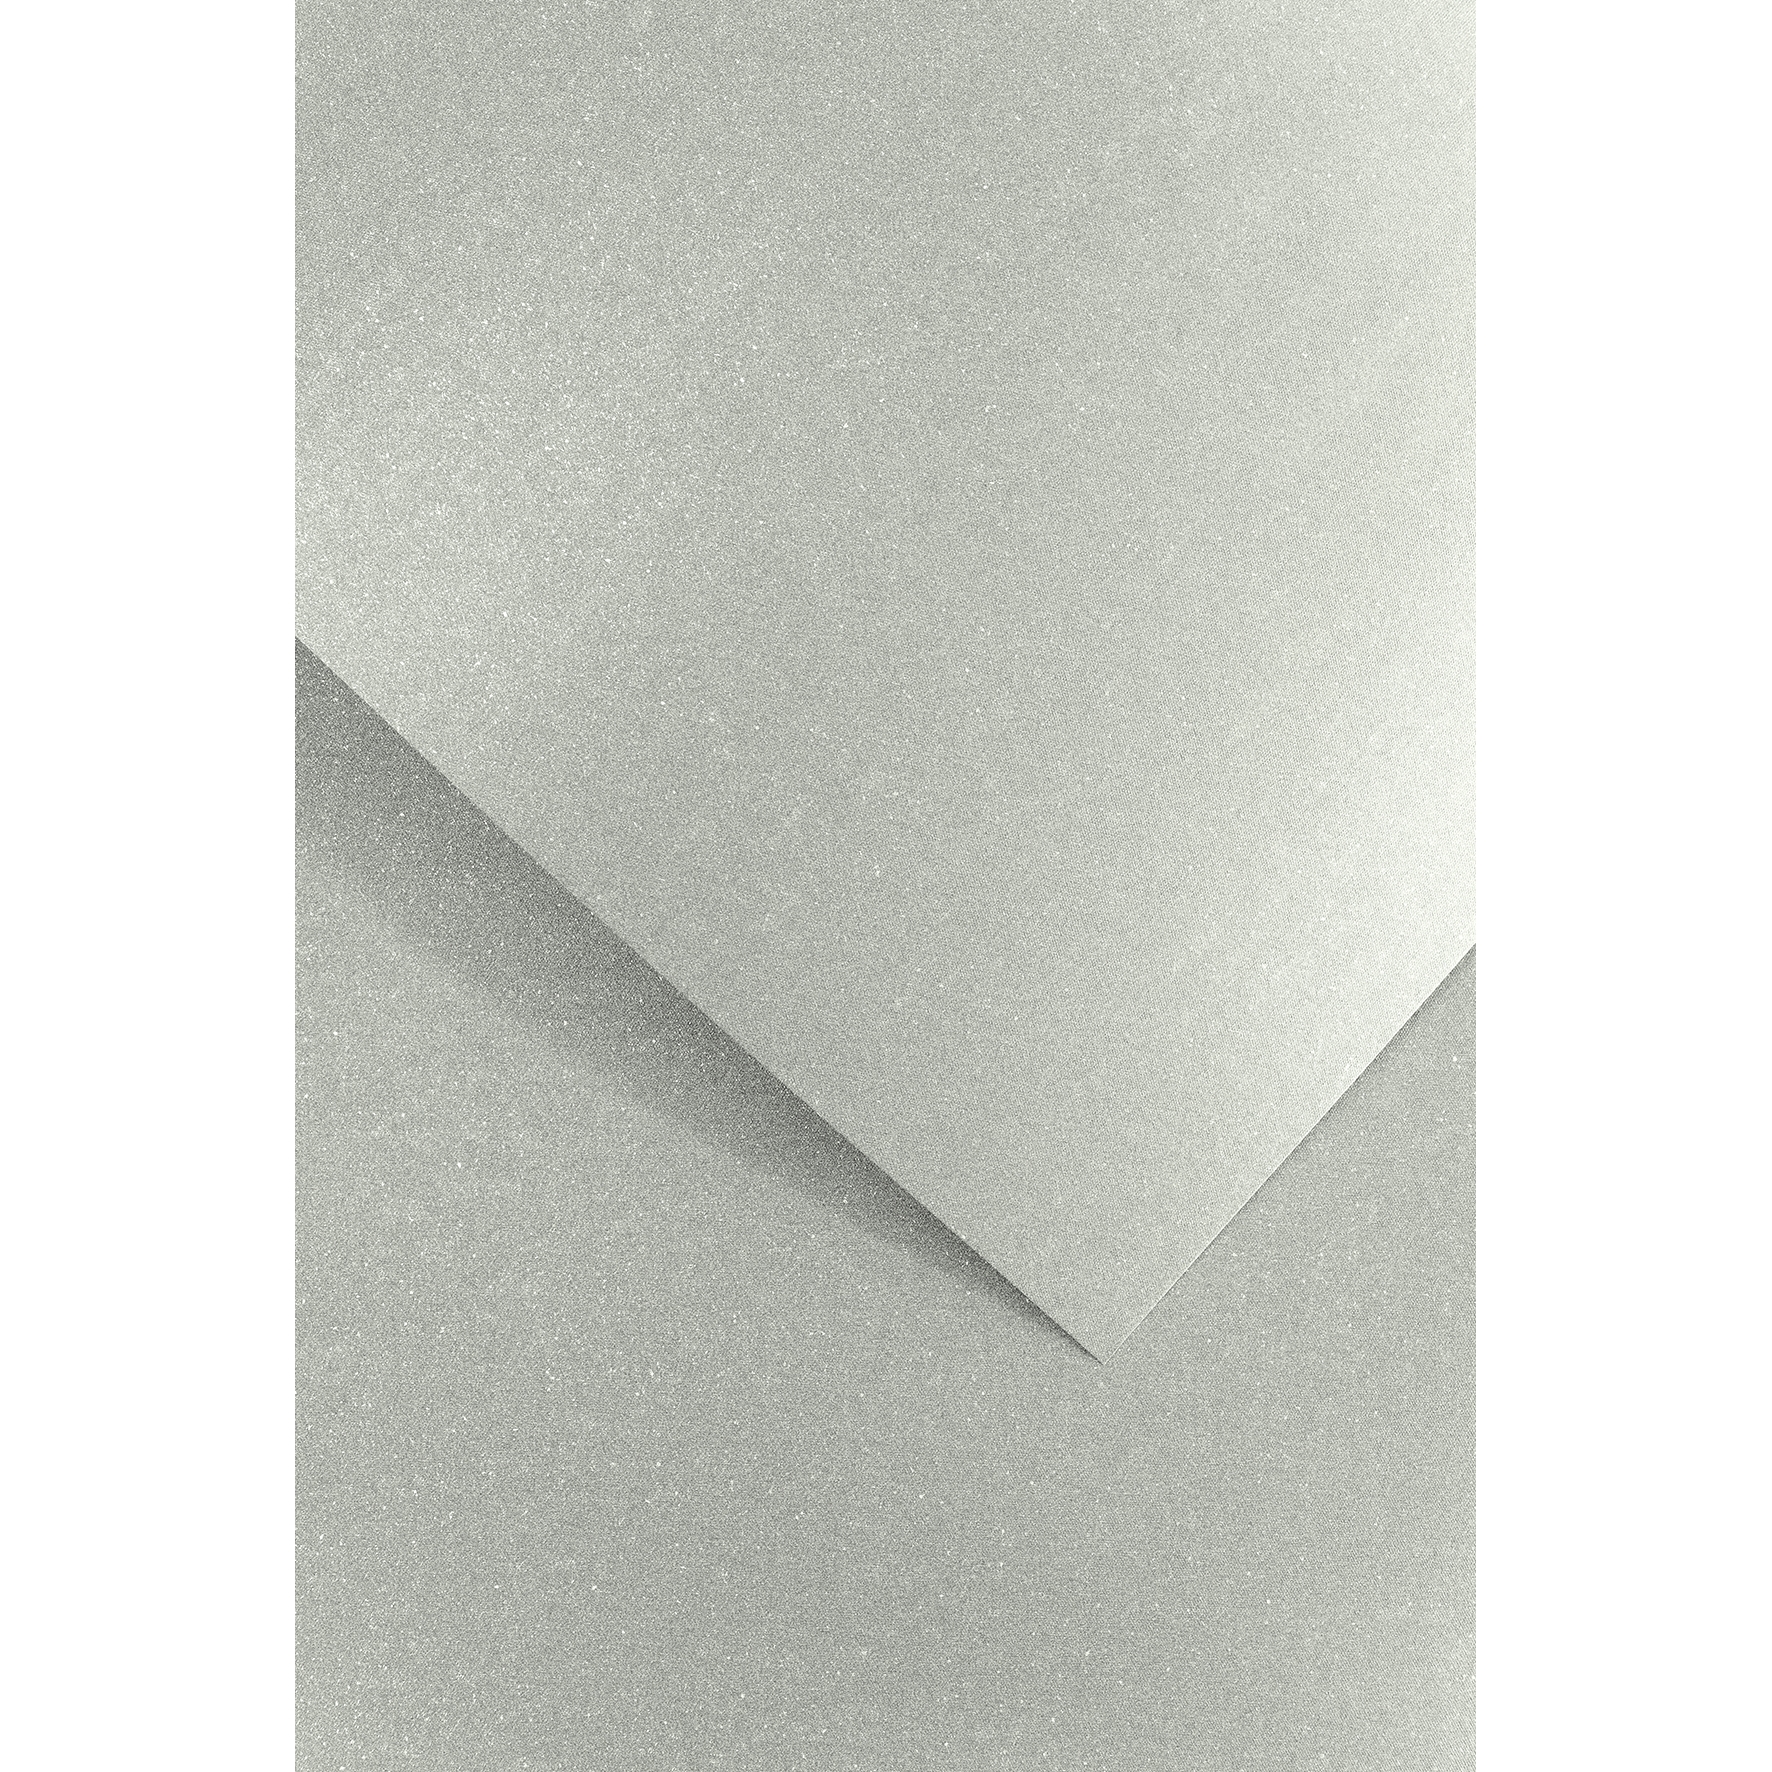 Ozdobný papír Millenium, stříbrný, 220g, 20ks